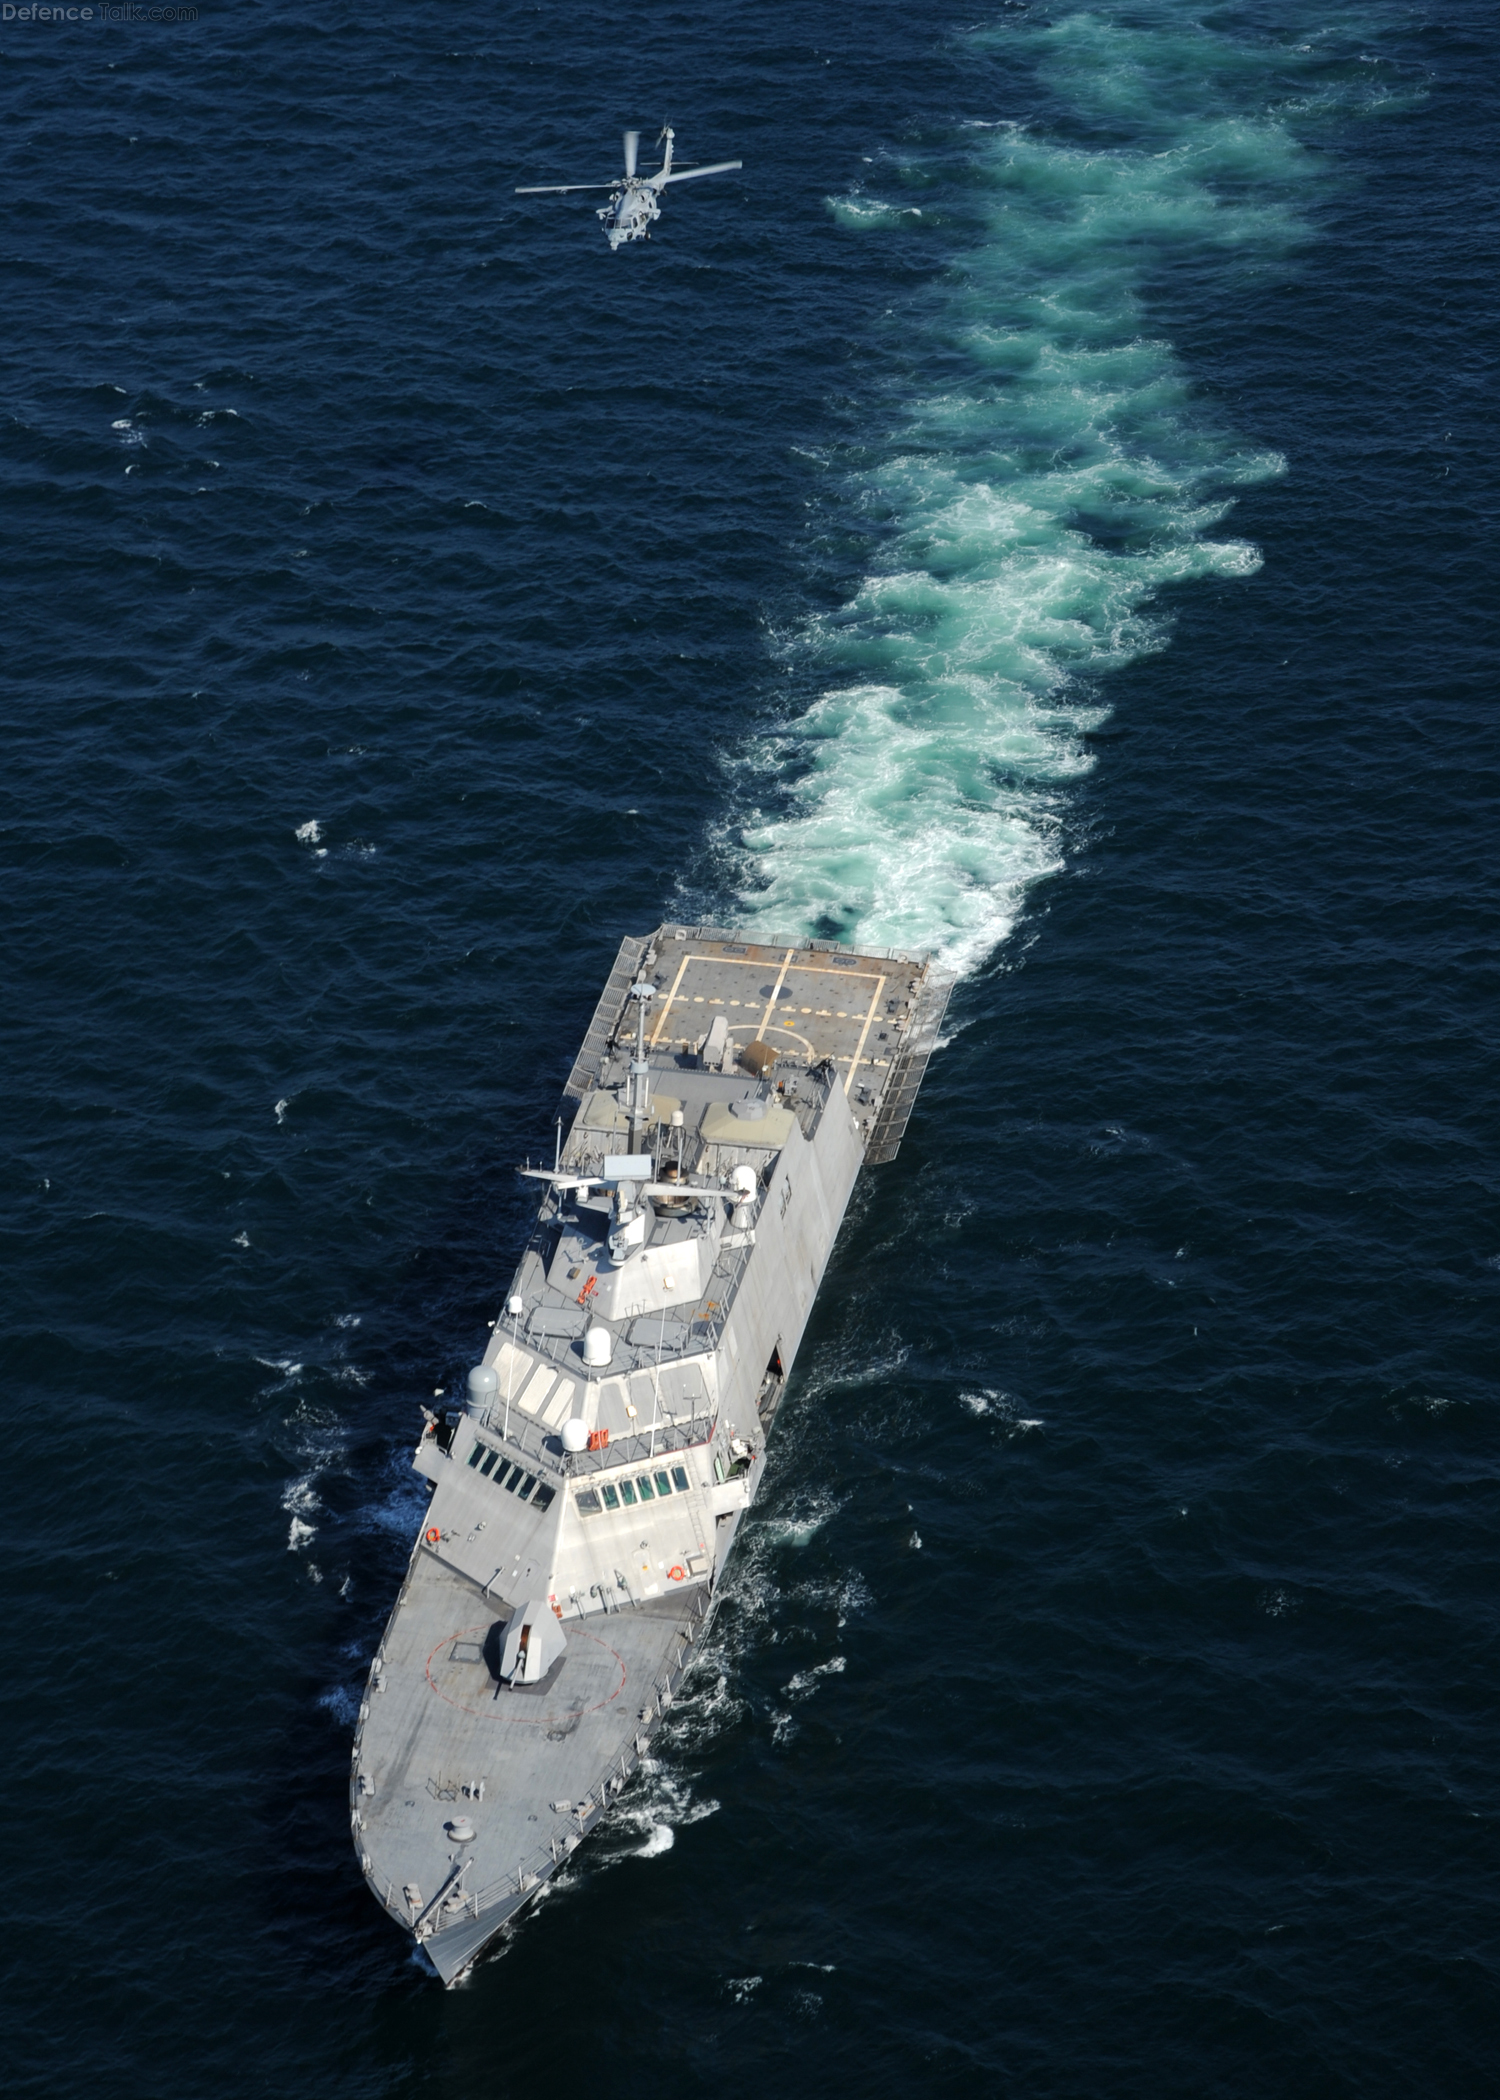 USS Freedom LCS 1